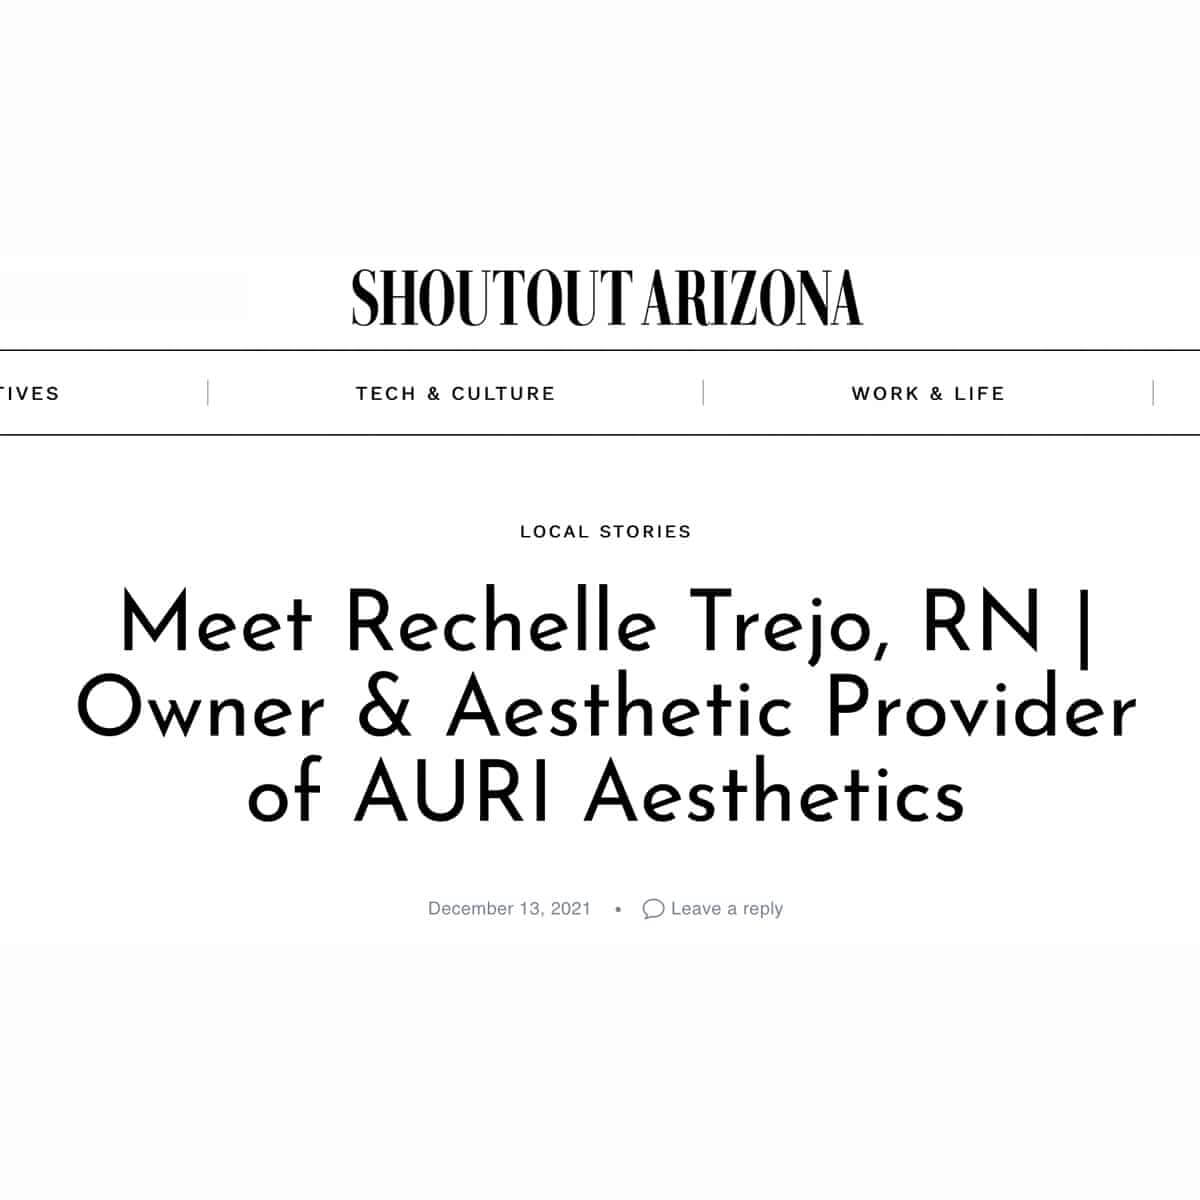 Shoutout Arizona | Auri Aesthetics in Gilbert, AZ